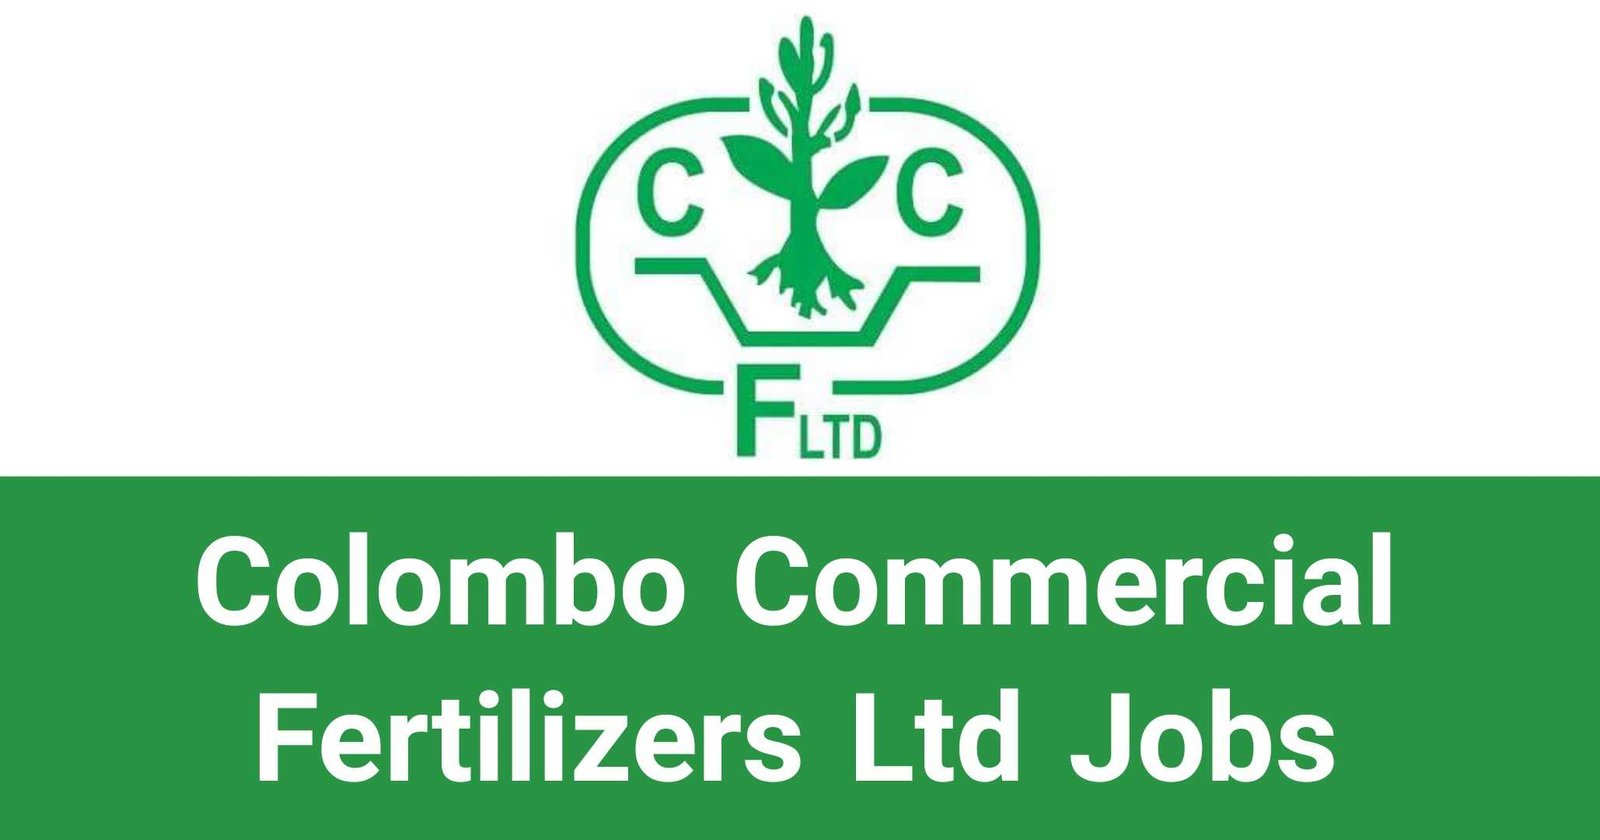 Colombo Commercial Fertilizers Ltd Jobs Vacancies Careers